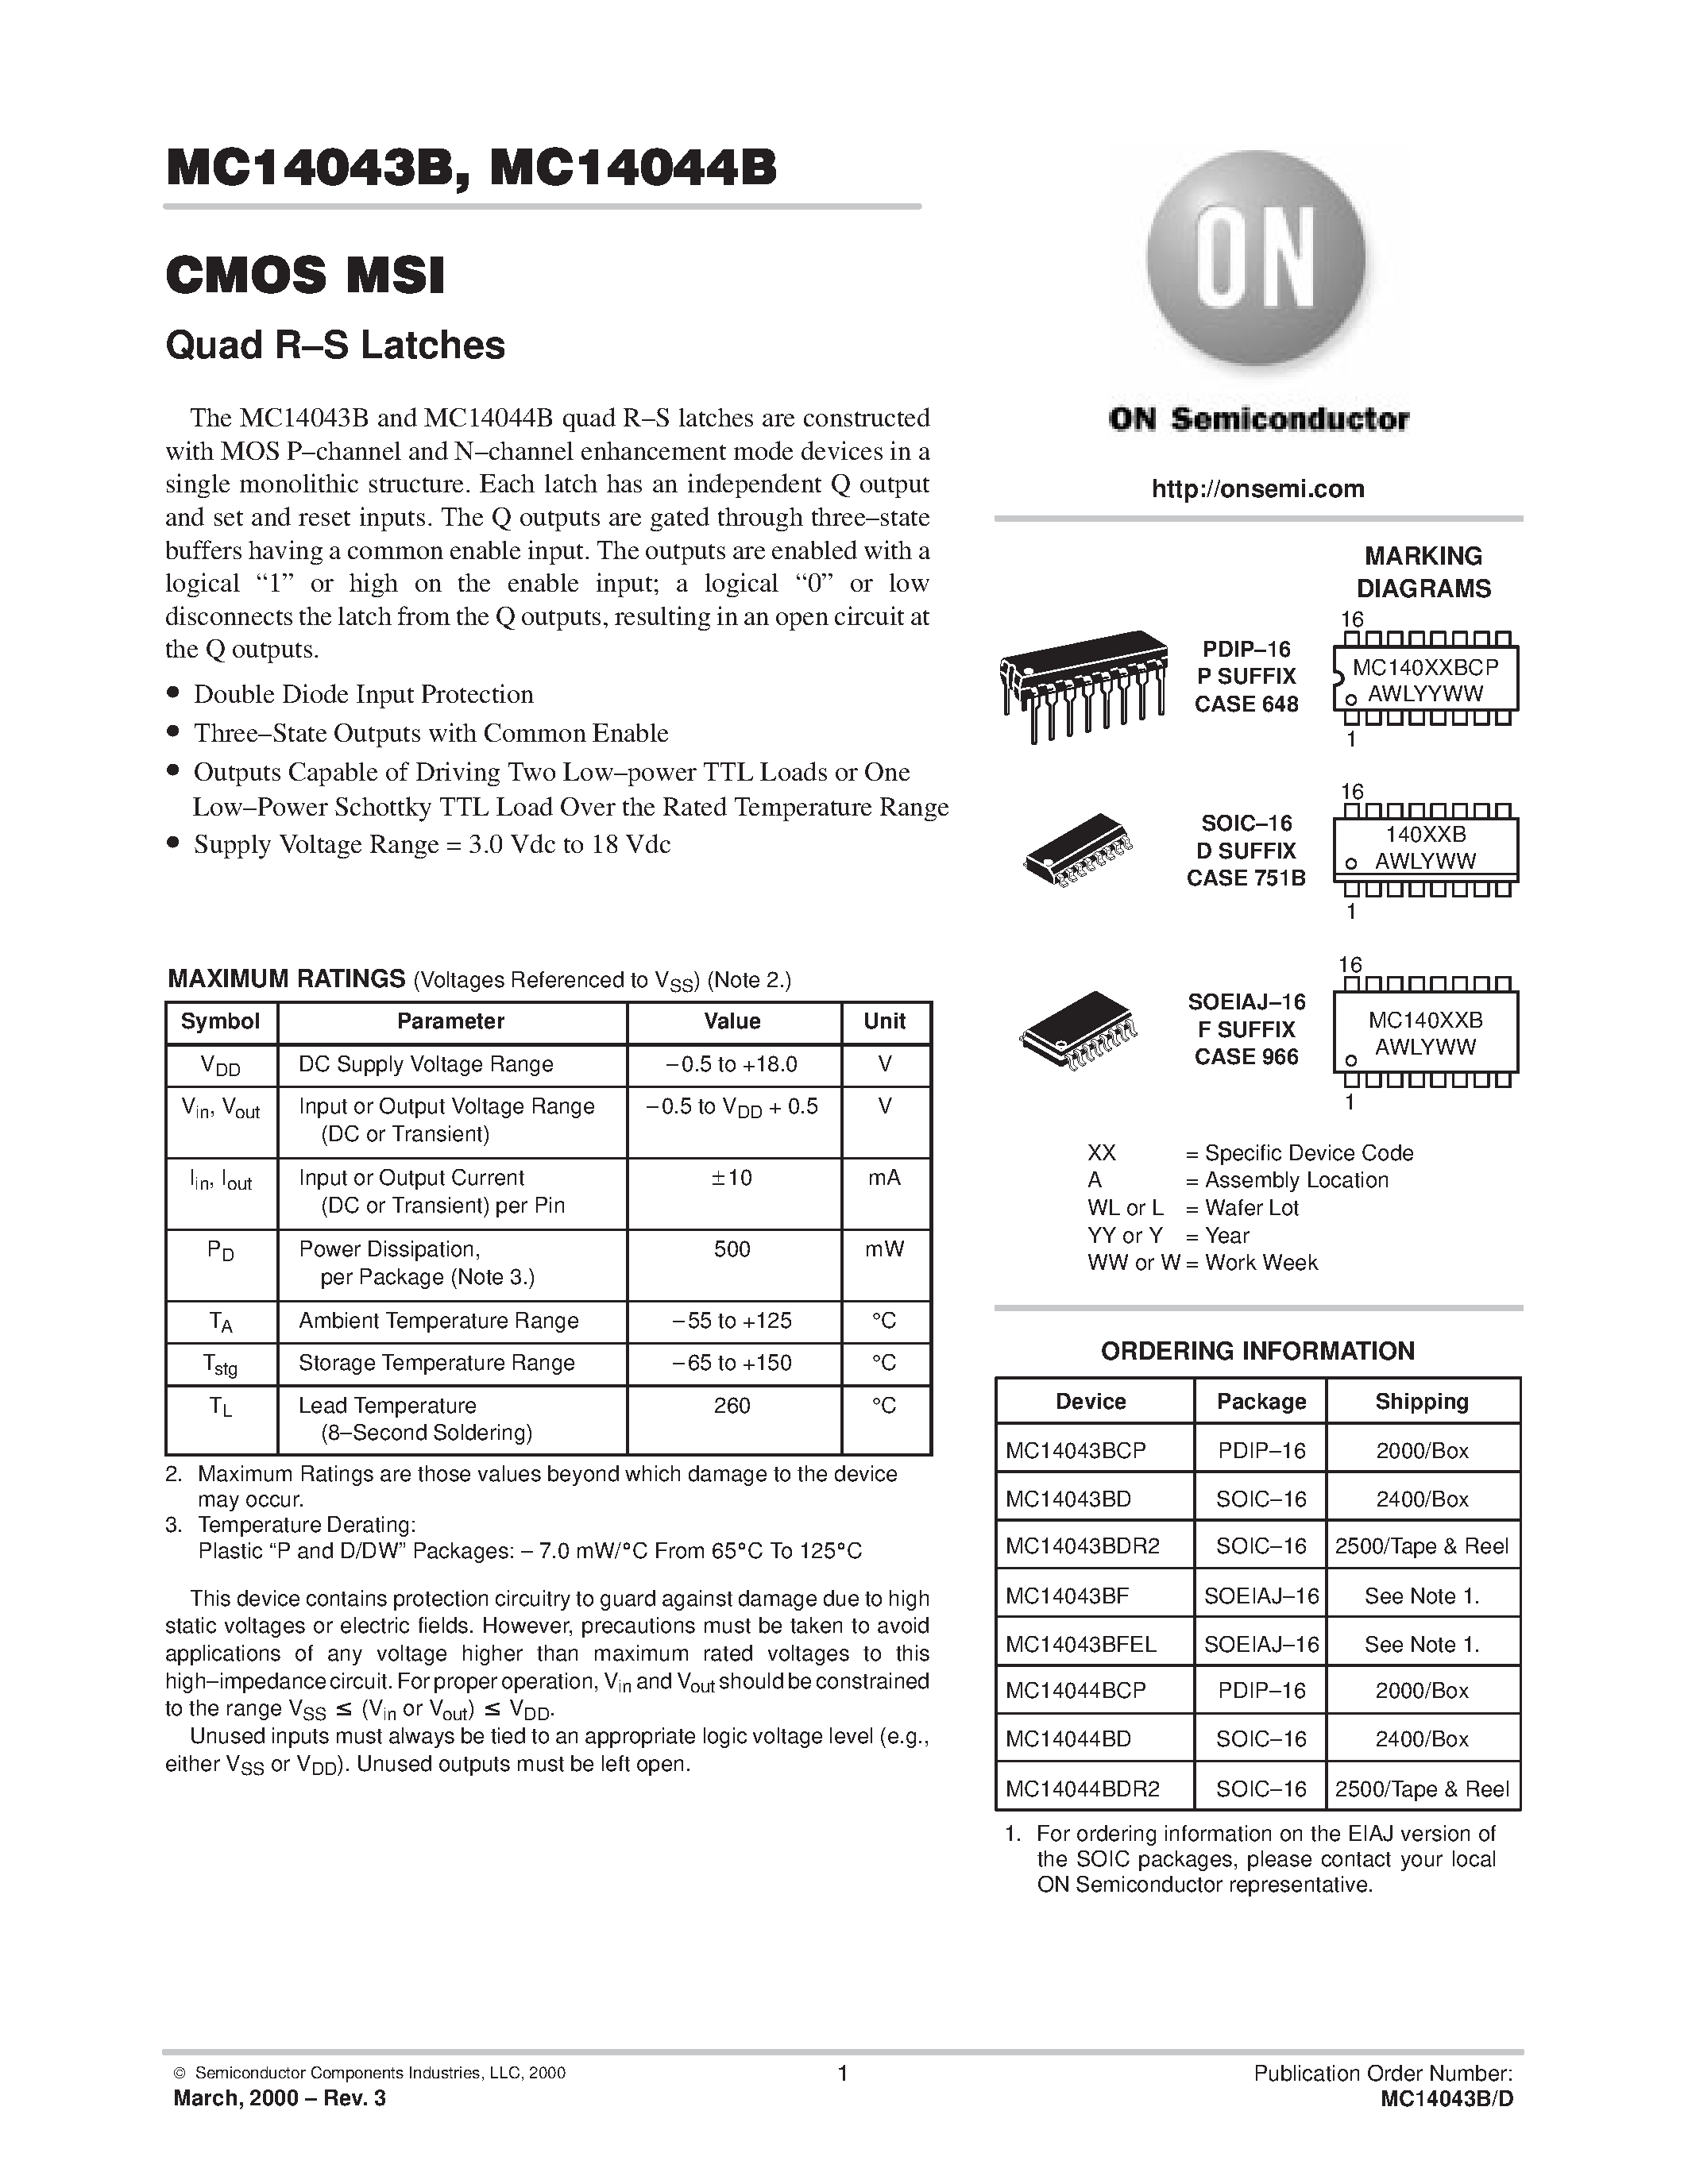 Даташит MC14043B - CMOS MSI(Quad R-S Latches) страница 1